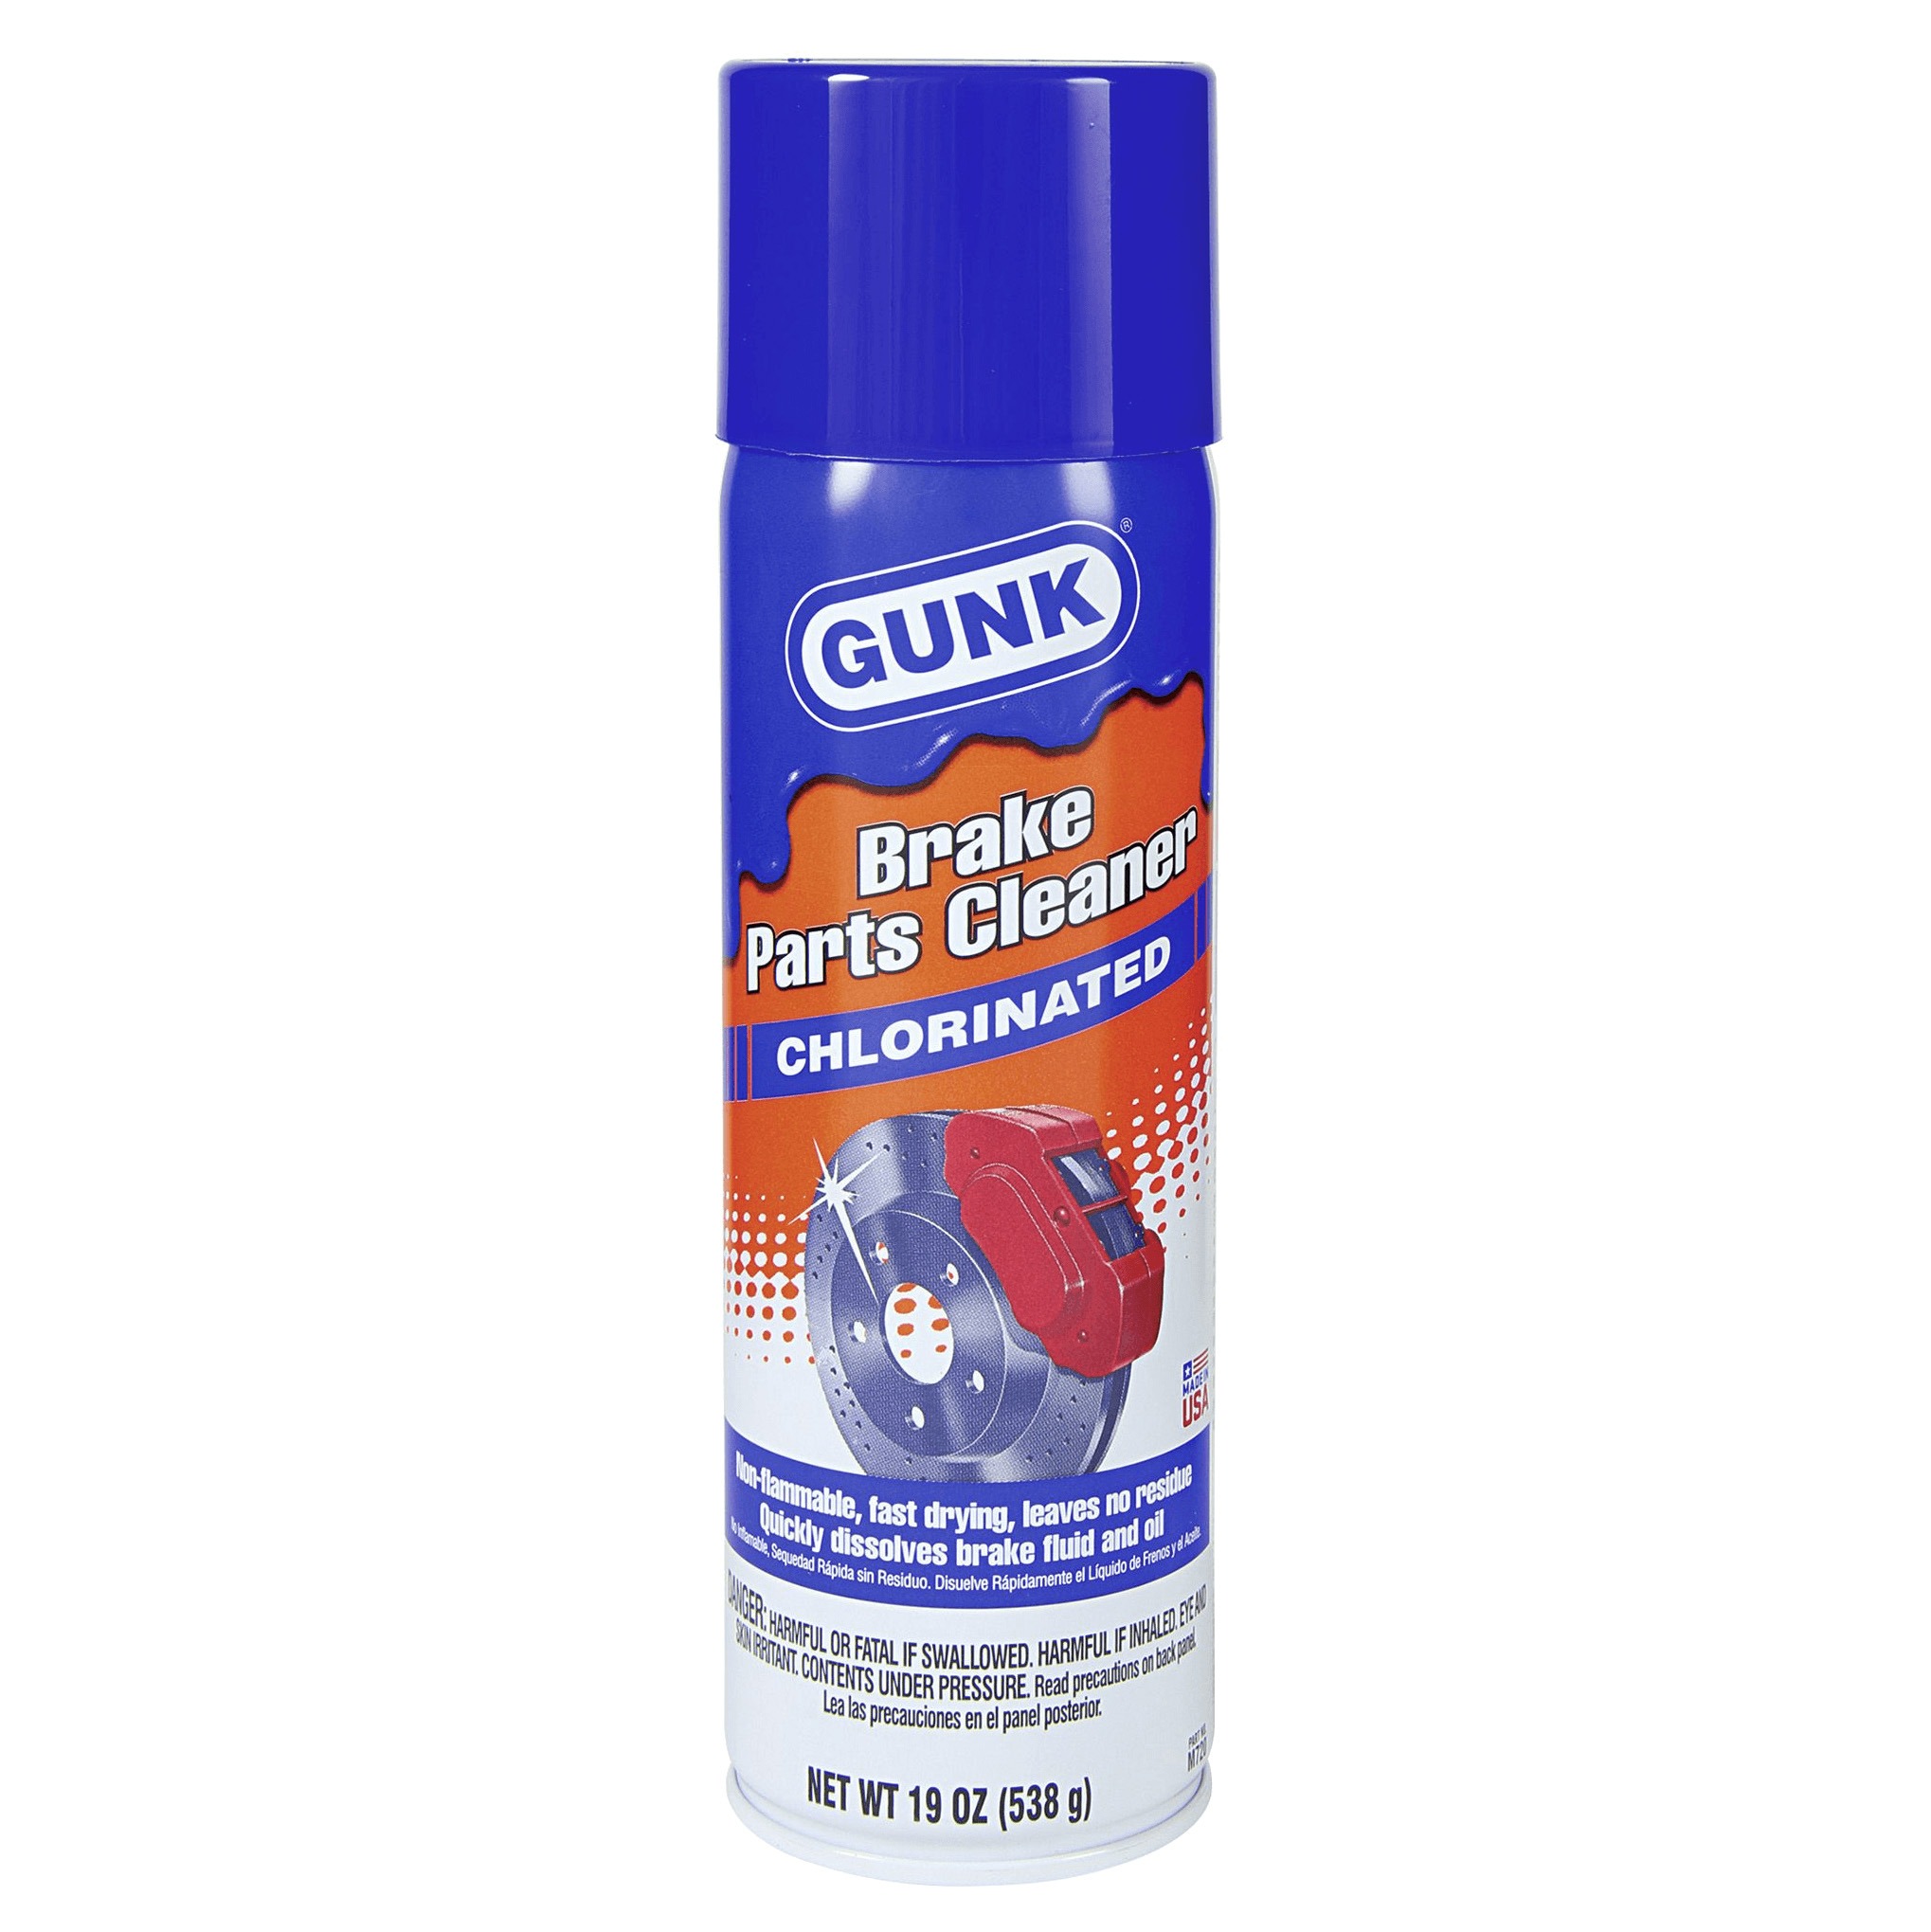 GUNK Brake Parts Cleaner Chlorinated